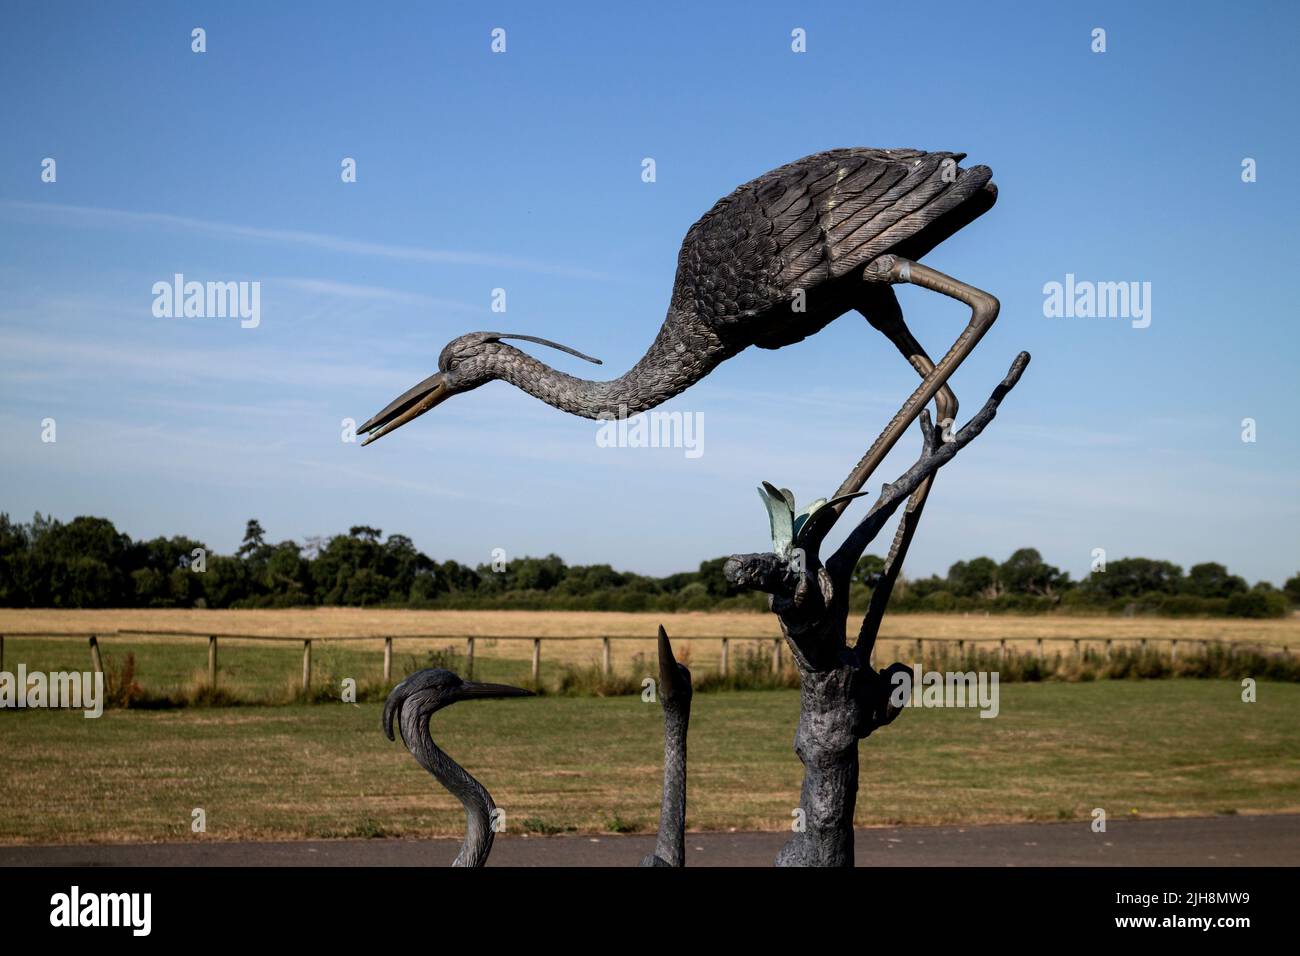 Herons sculpture at Dallas Burston Polo Club, Southam, Warwickshire, UK Stock Photo